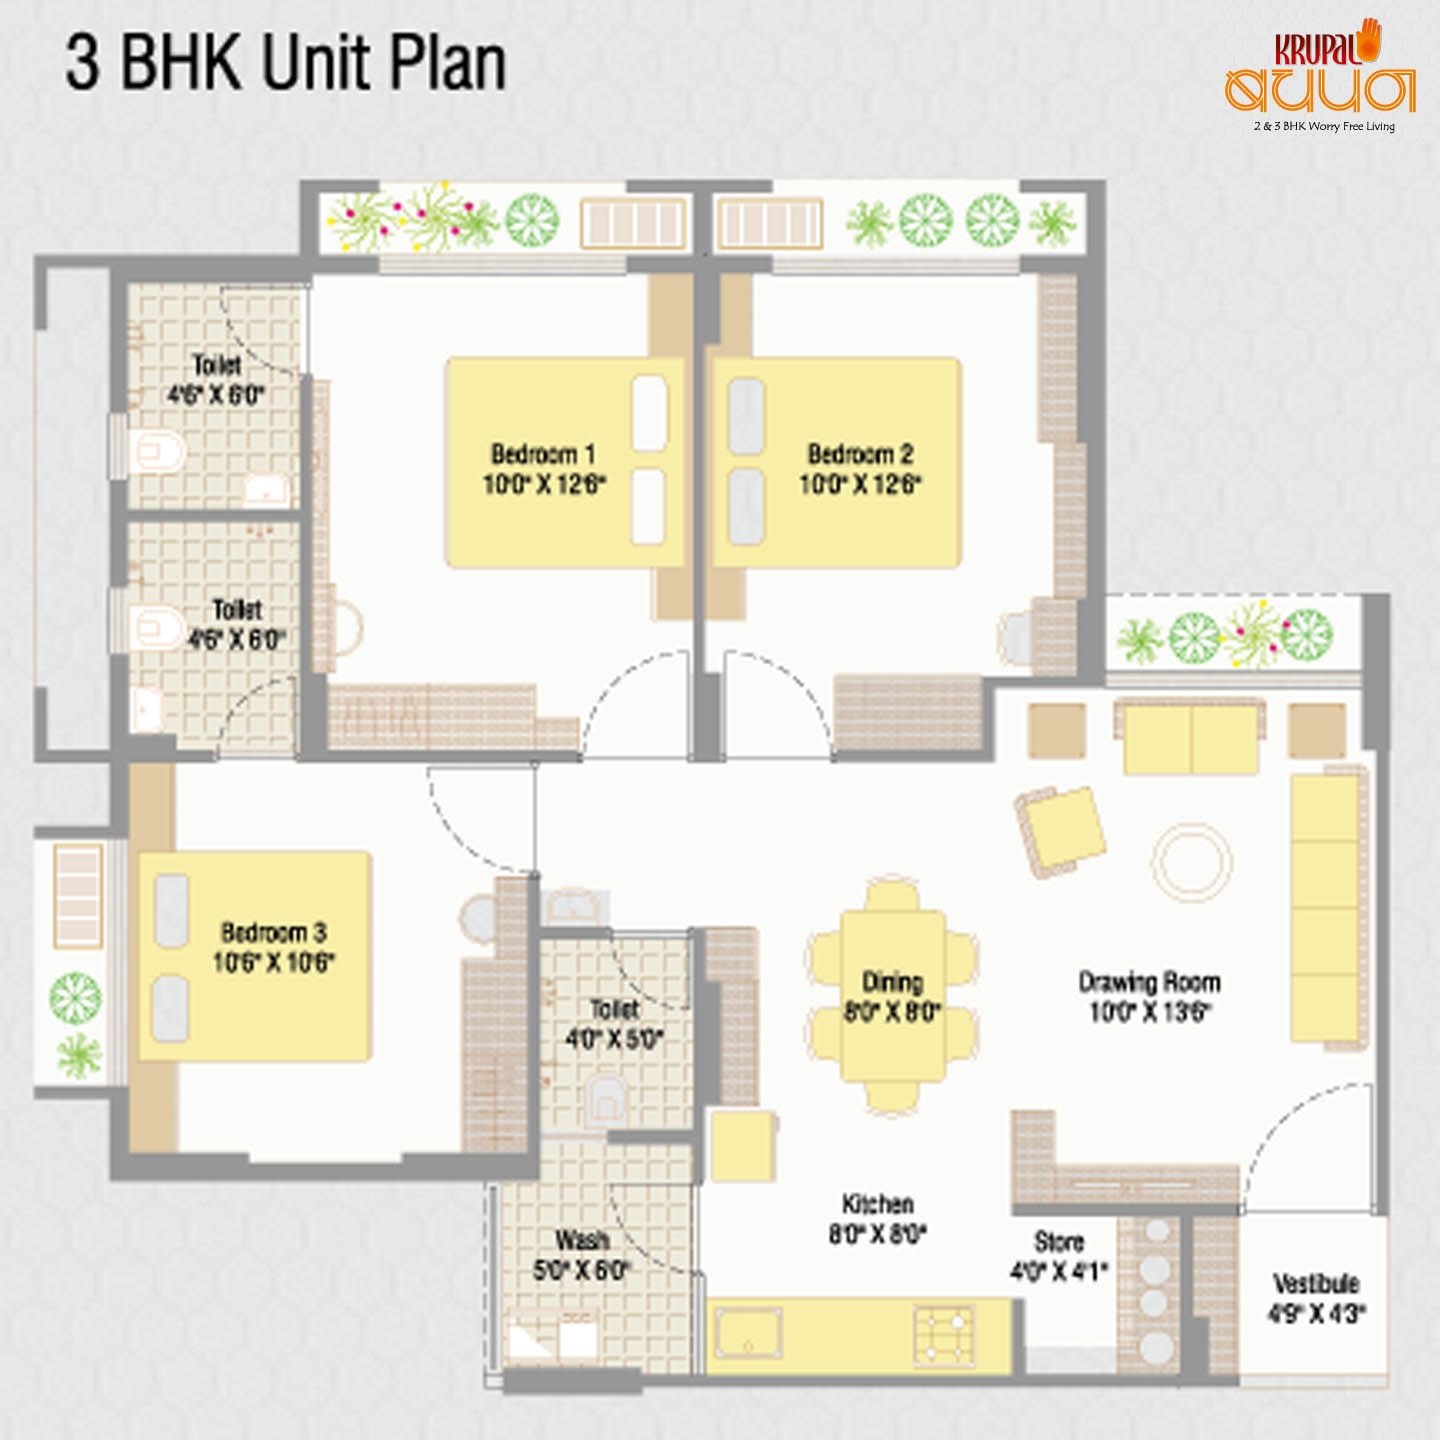 3 BHK Unit Plan of Krupal bachpan at Shela